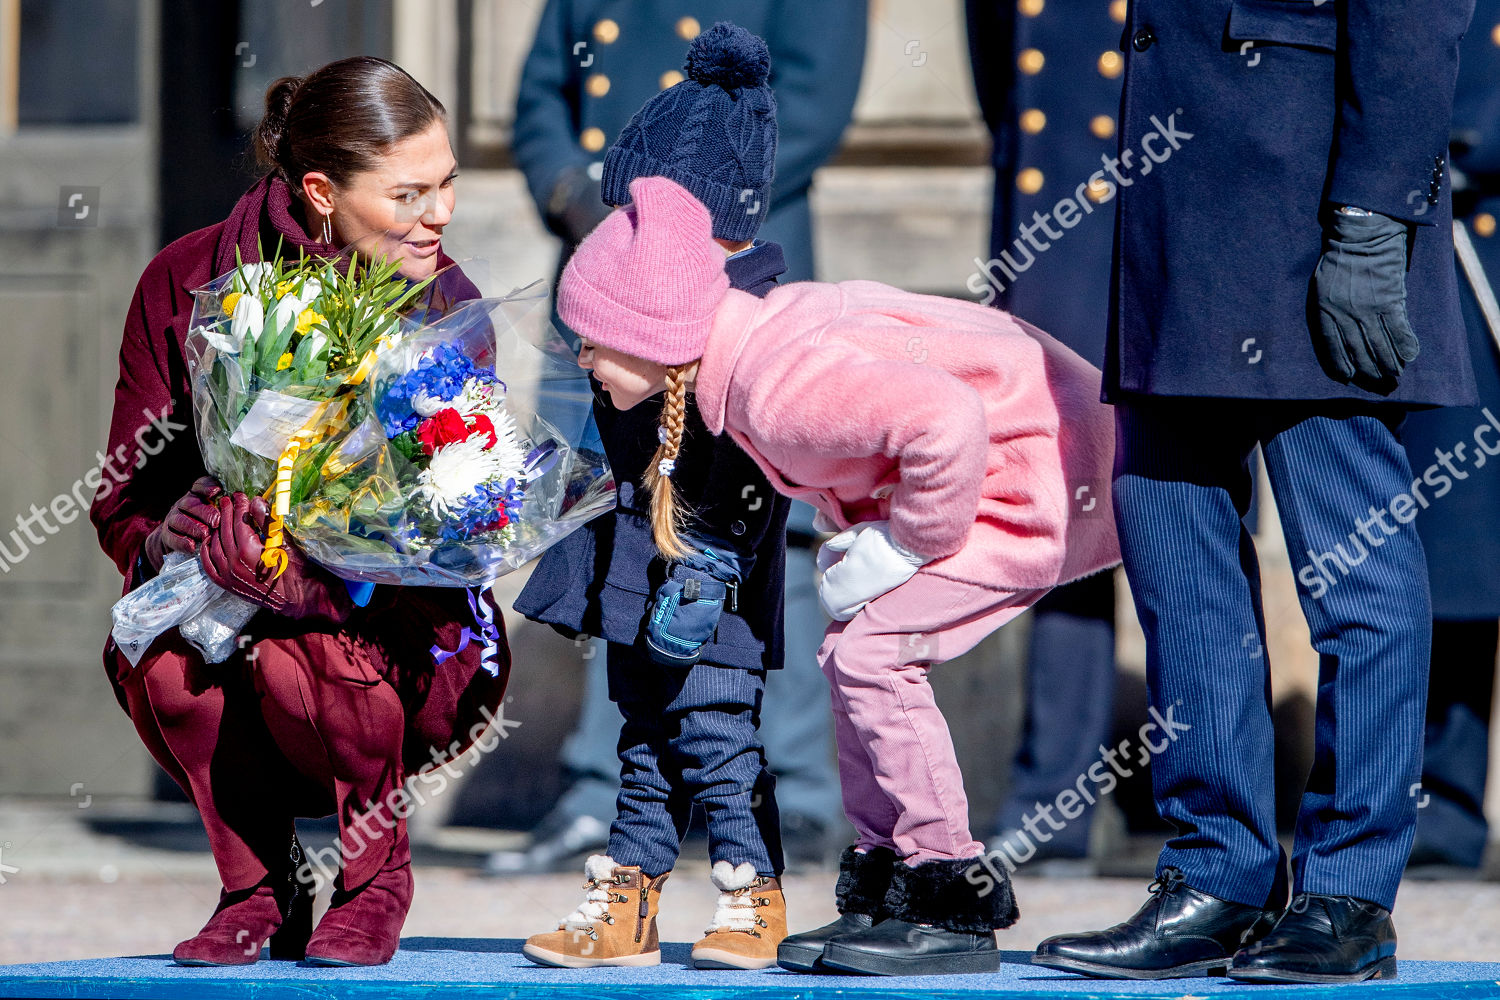 crown-princess-victoria-name-day-celebrations-stockholm-sweden-shutterstock-editorial-10151872g.jpg